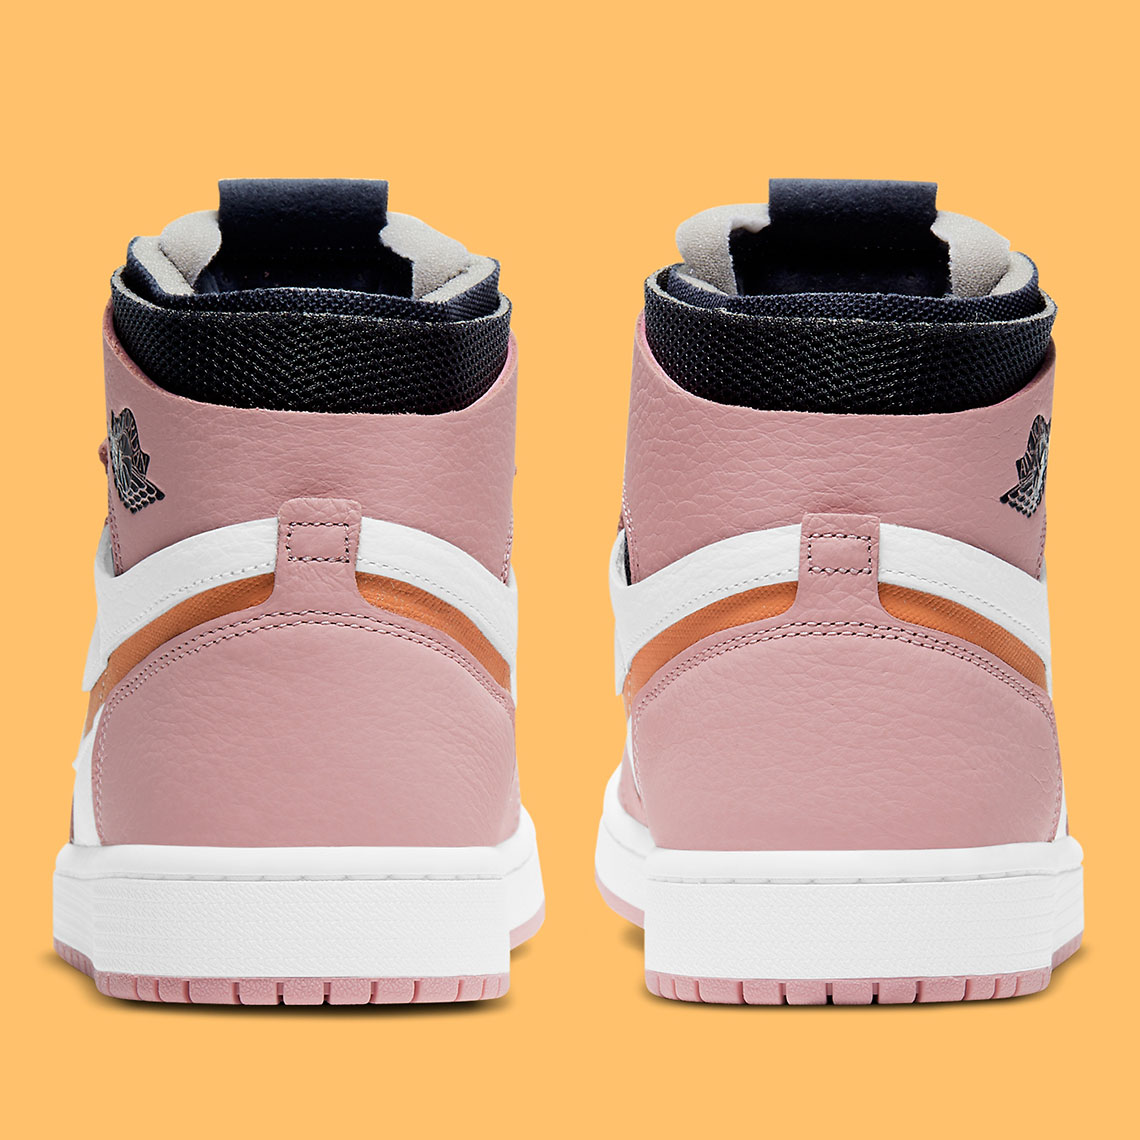 Jordan sneaker tees match Neon 4s Air Max 95 Volt Quarantine quantity Zoom Comfort Pink Glaze Cactus Flower White Sail Ct0979 601 5